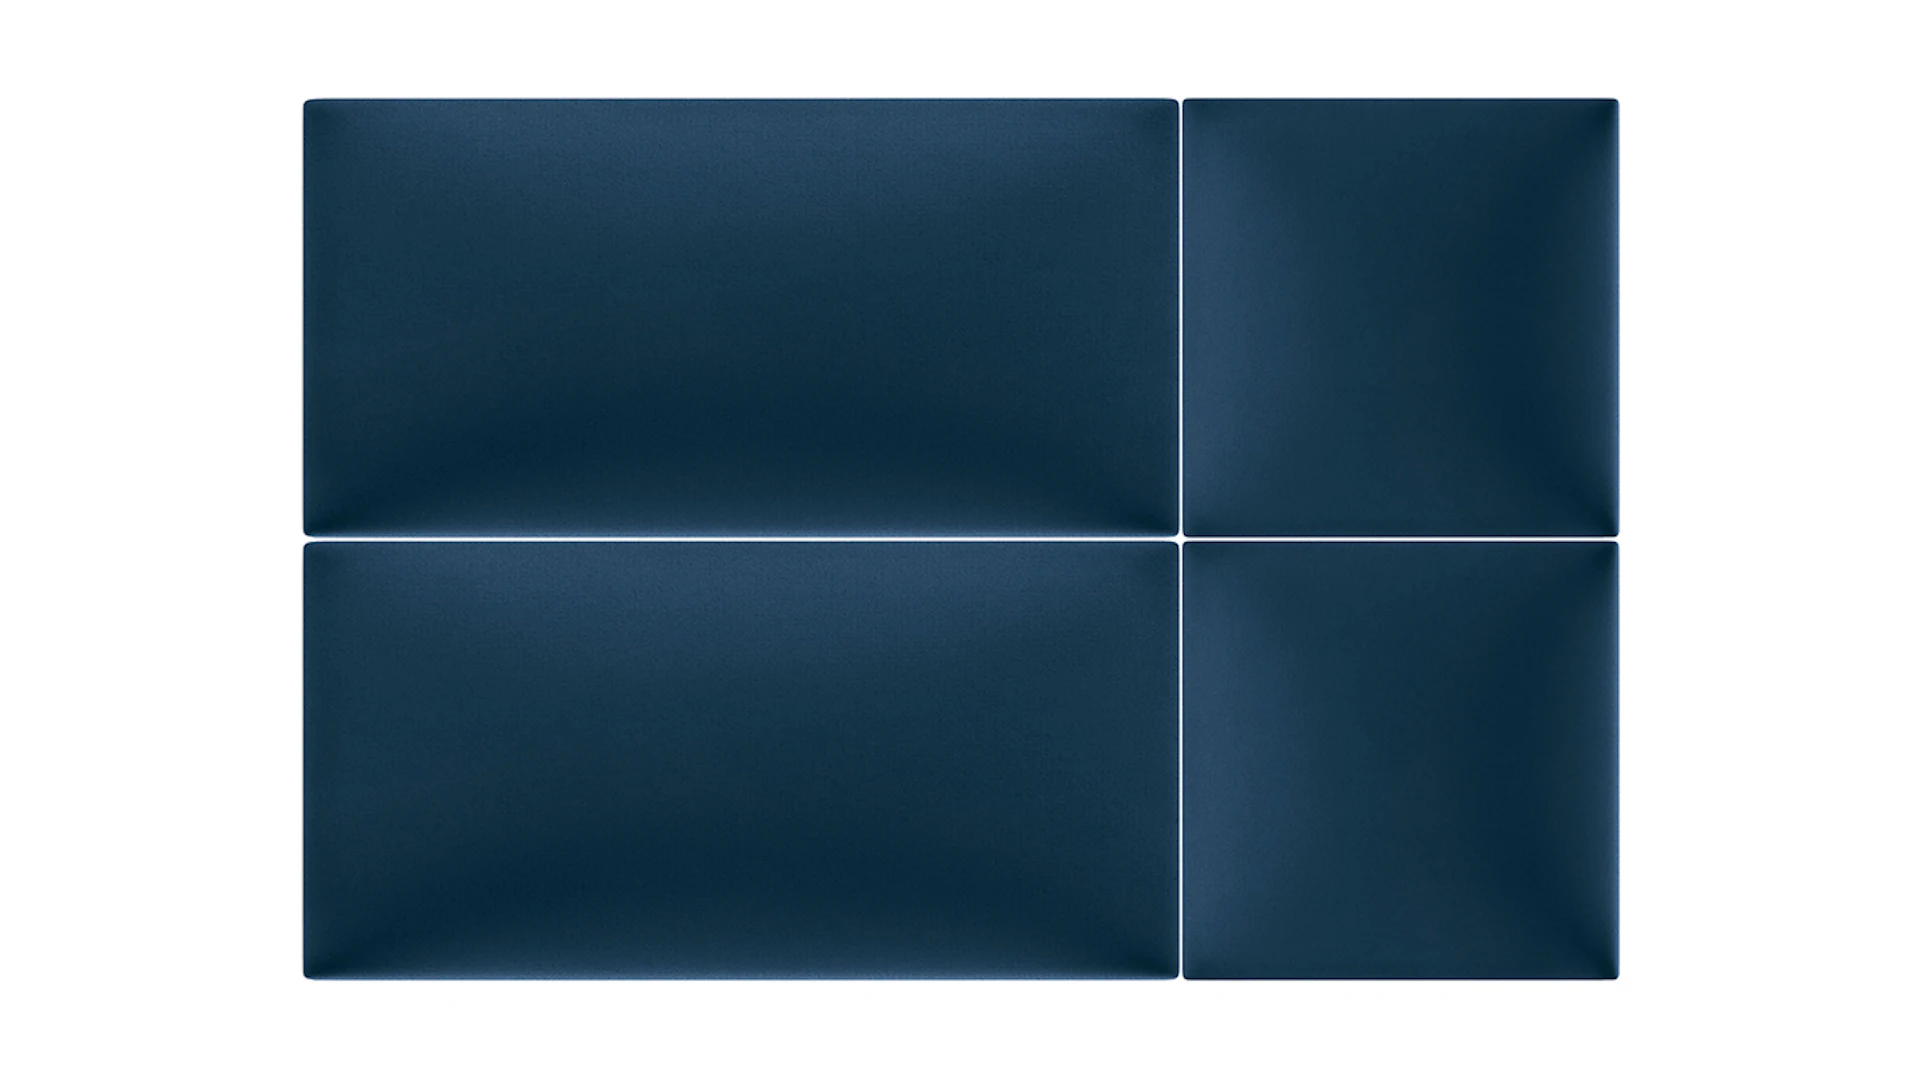 planeo ComfortWall - Acoustic wall cushion 60x30cm dark blue